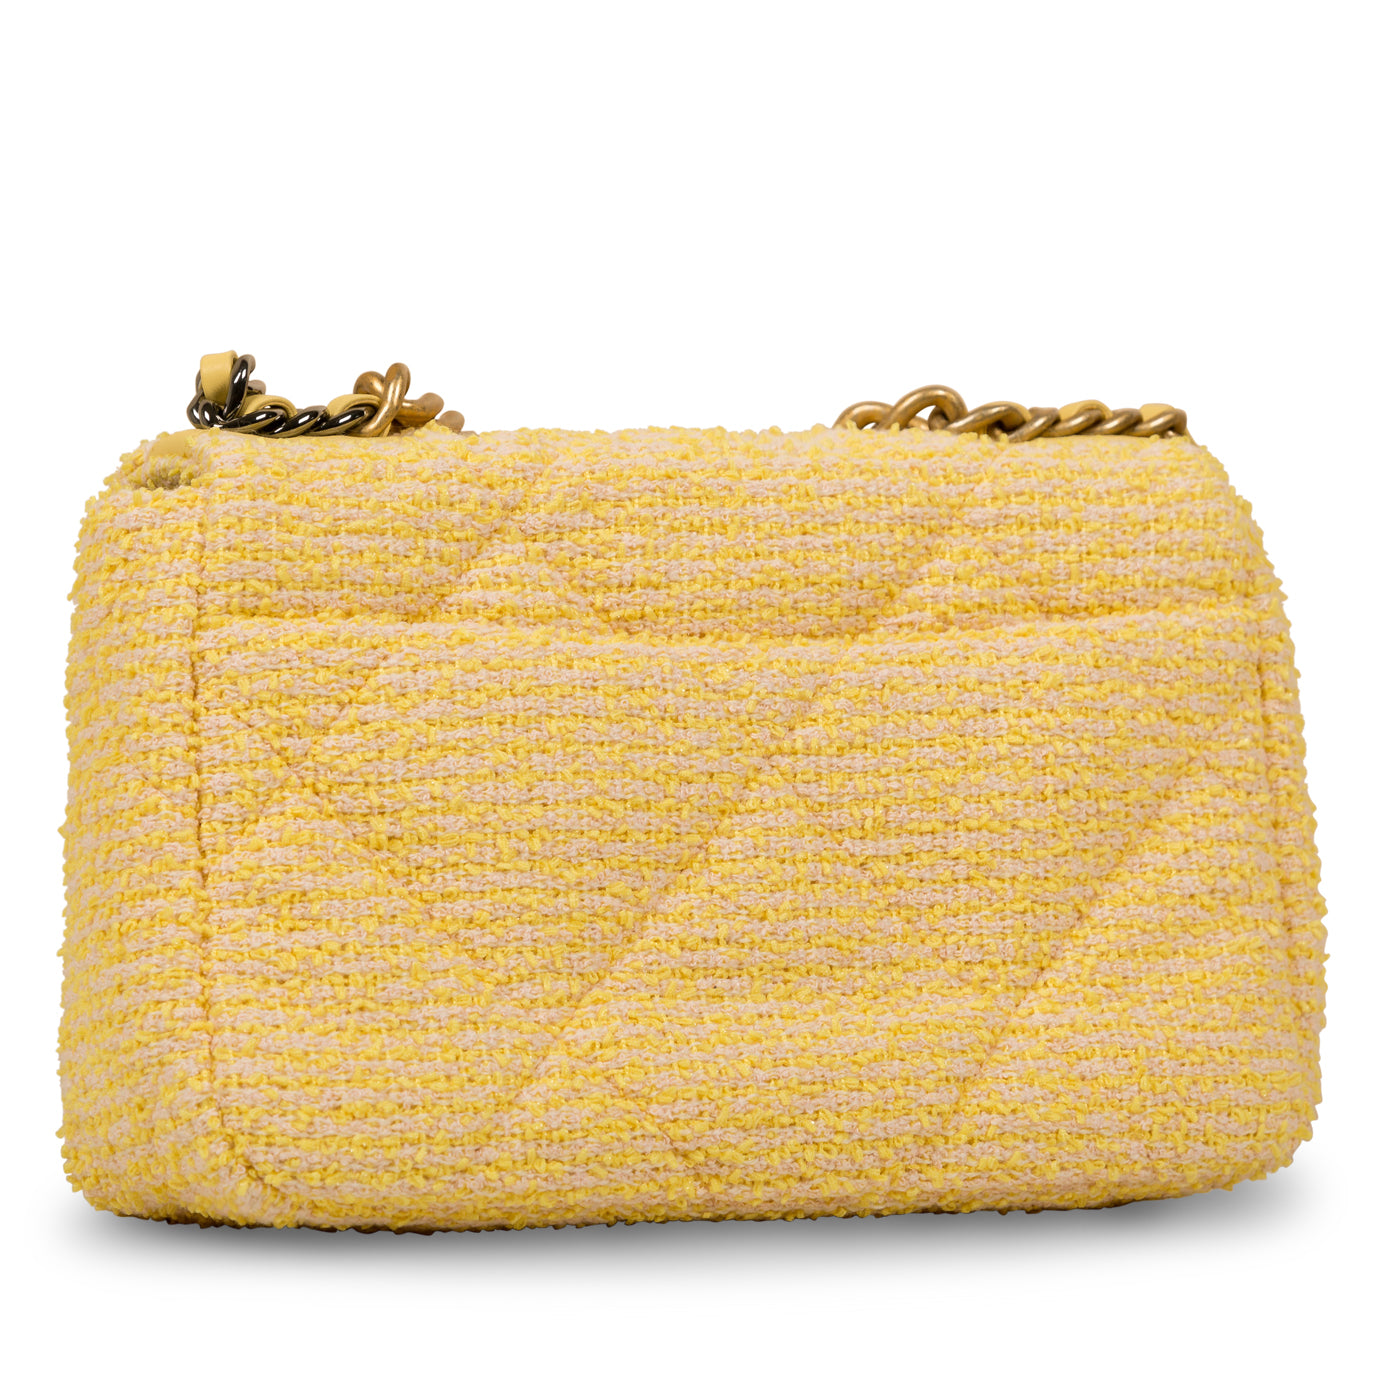 Chanel - Chanel 19 Flap Bag - Small - Yellow Tweed